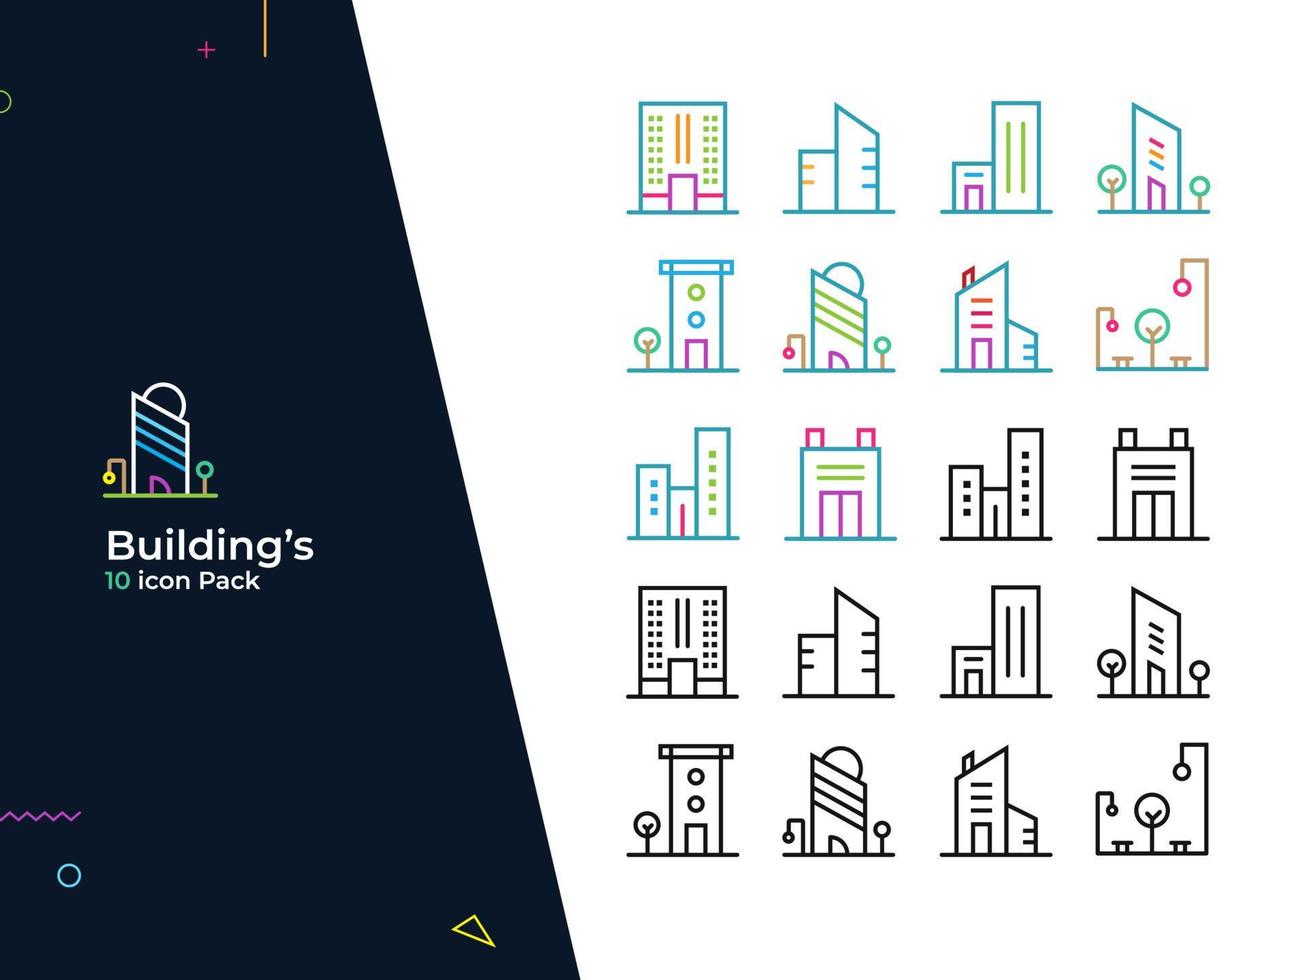 edificios - paquete de 10 iconos. adecuado para sitio web, aplicación móvil, afiche, presentación, volante, impresión, redes sociales, etc. vector